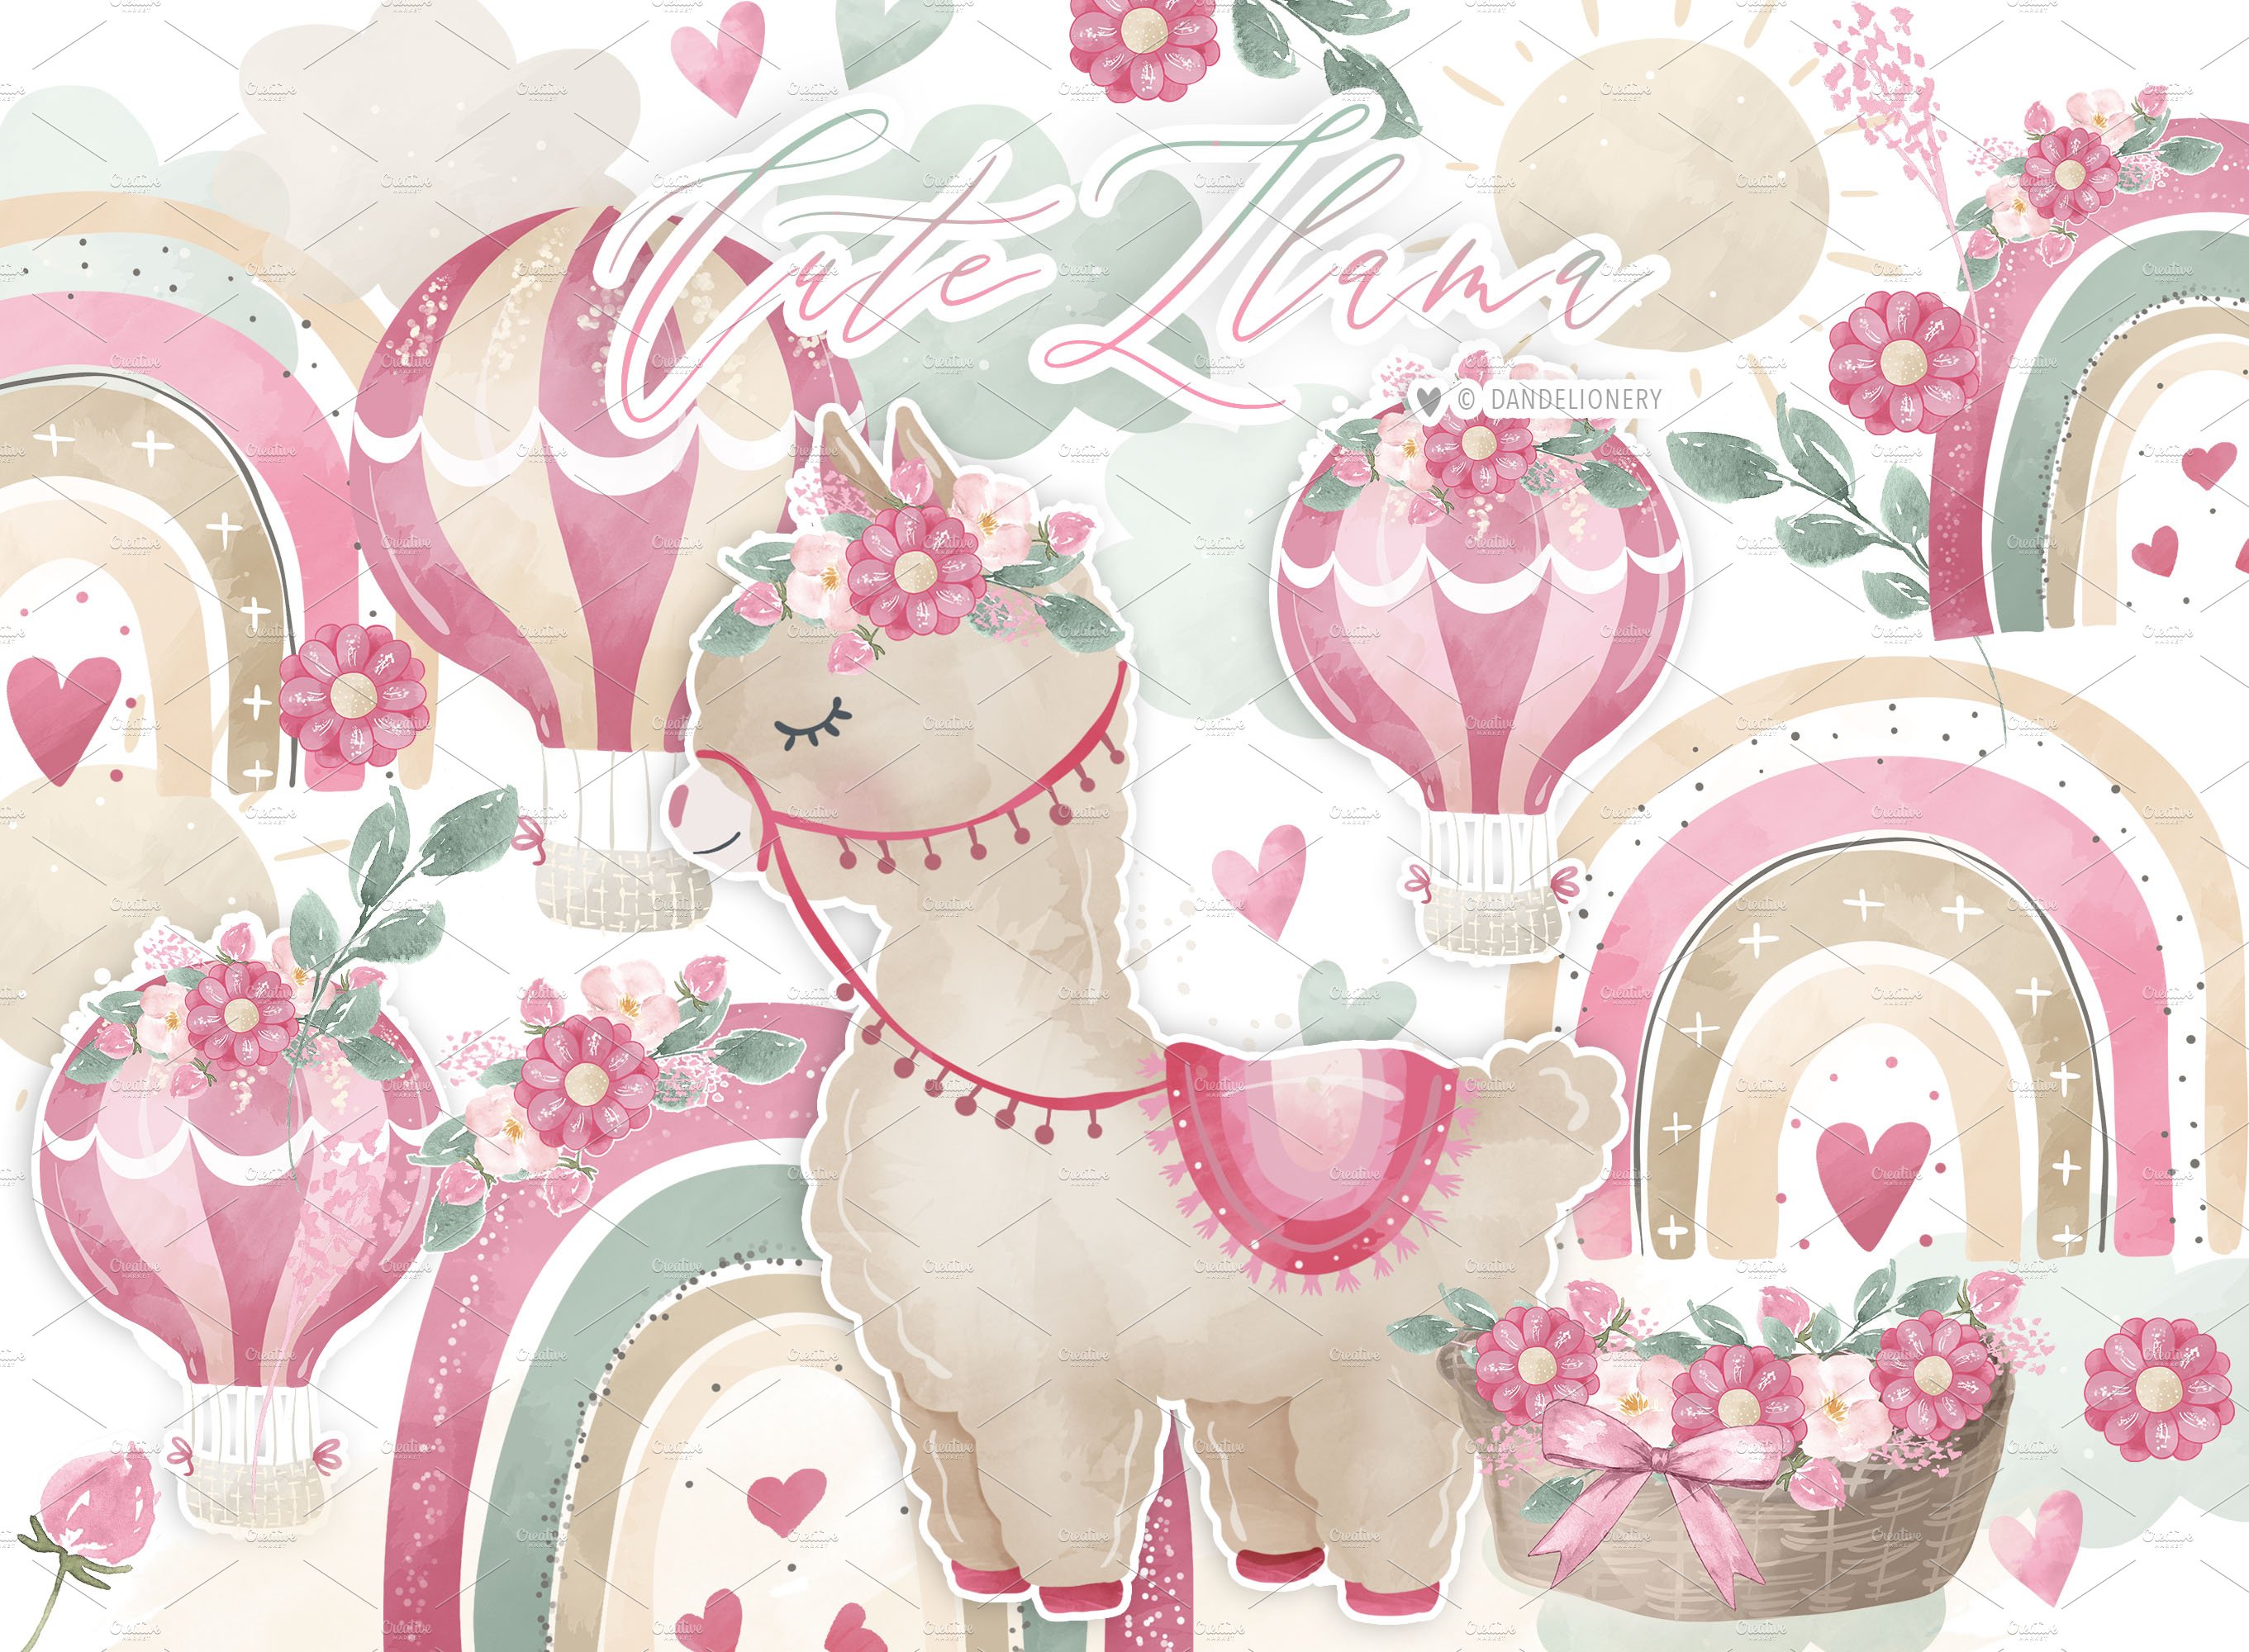 Cute Lama floral design cover image.